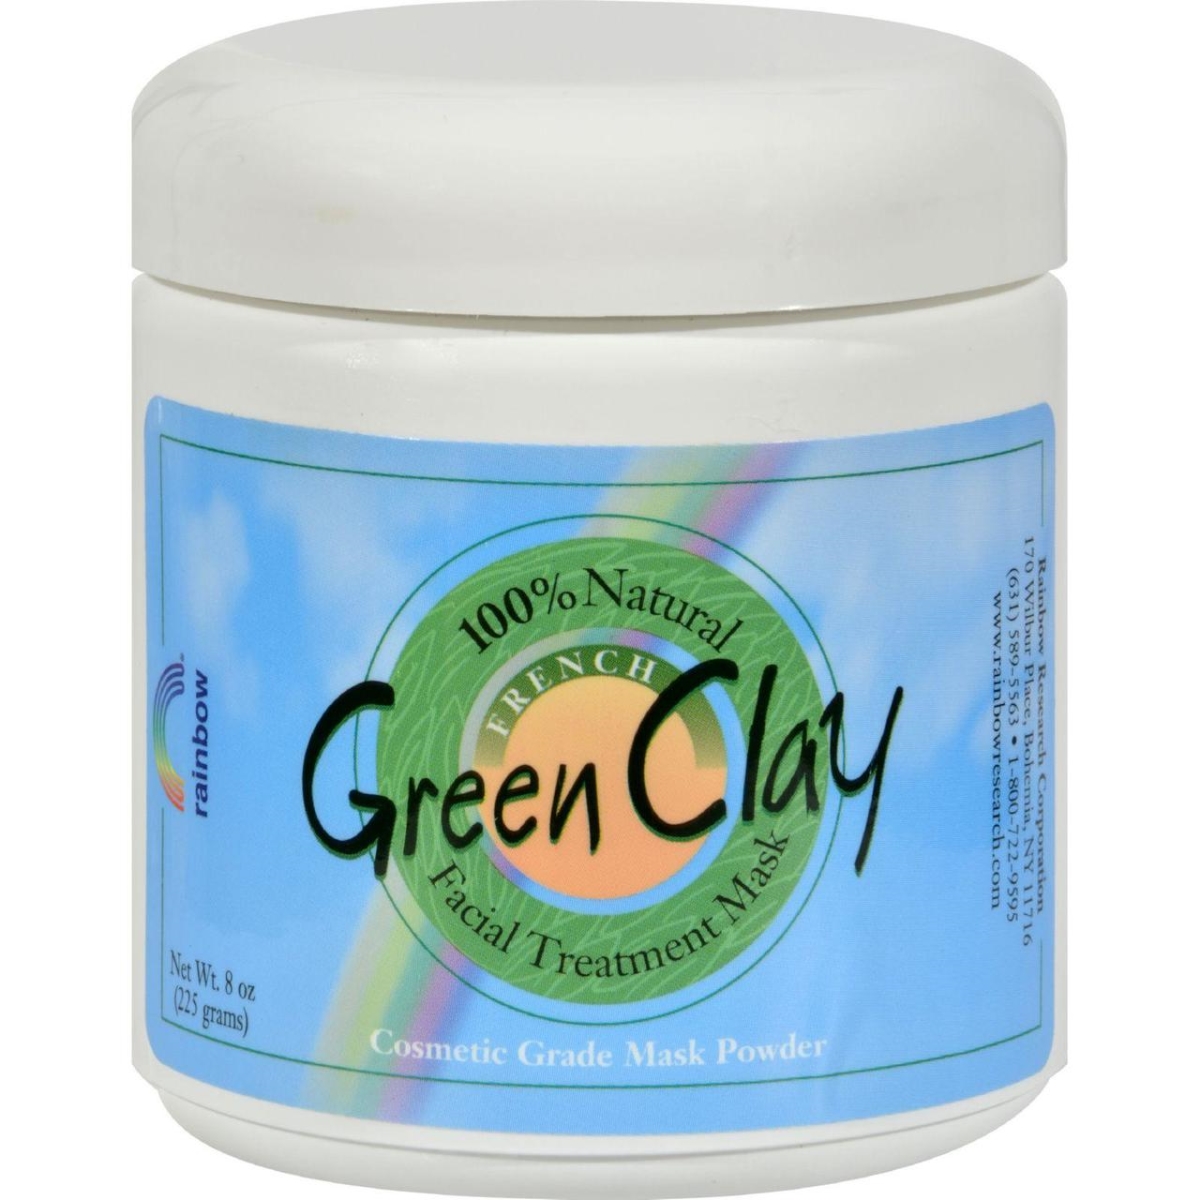 Hg0439307 8 Oz French Green Clay Facial Treatment Mask